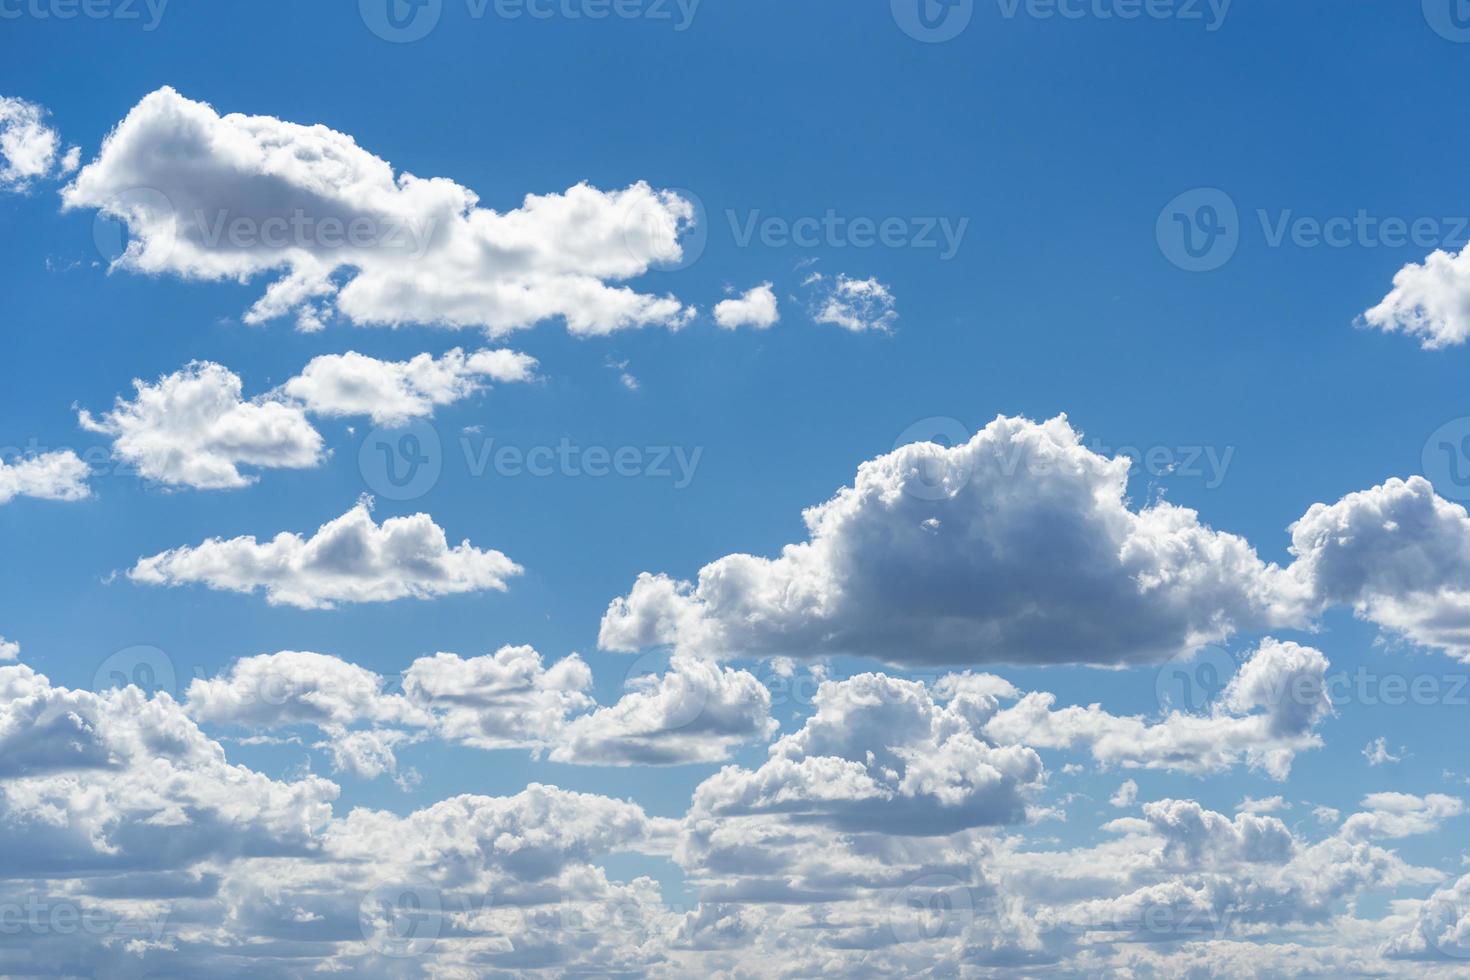 Cumuluswolken am Himmel foto